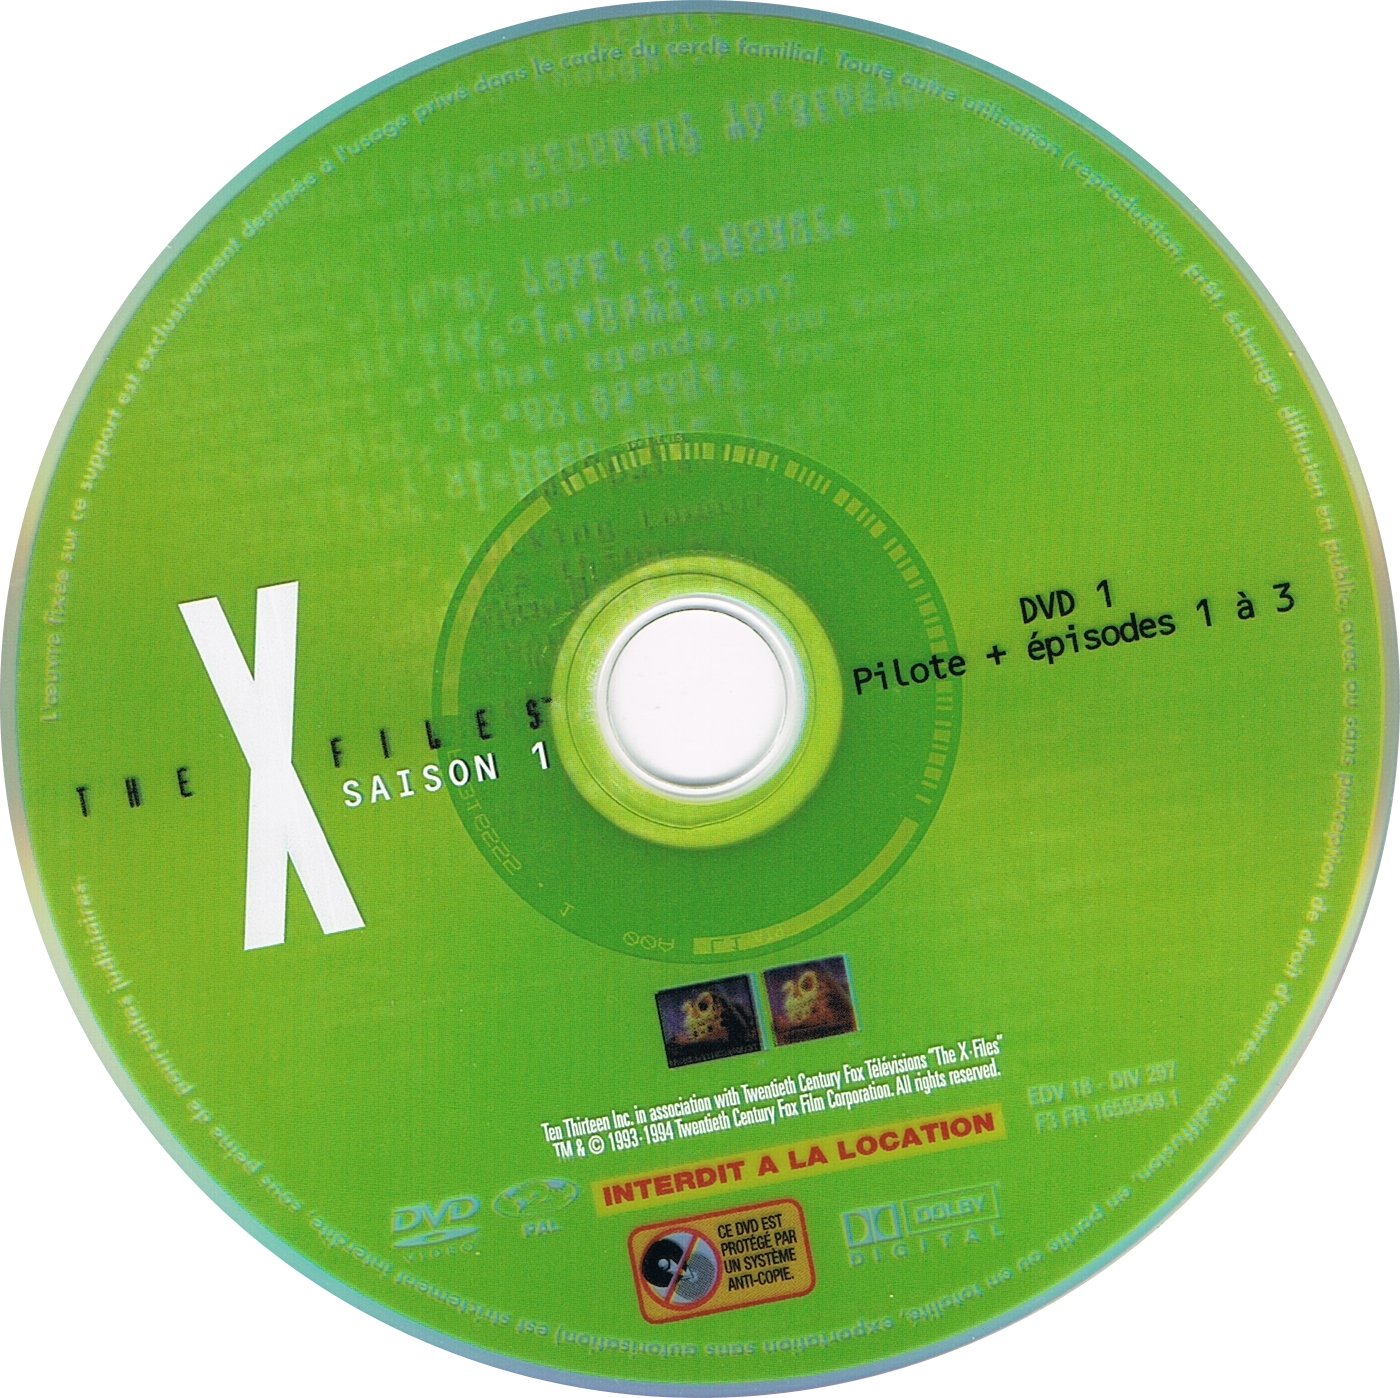 The X Files Saison 1 DVD 1